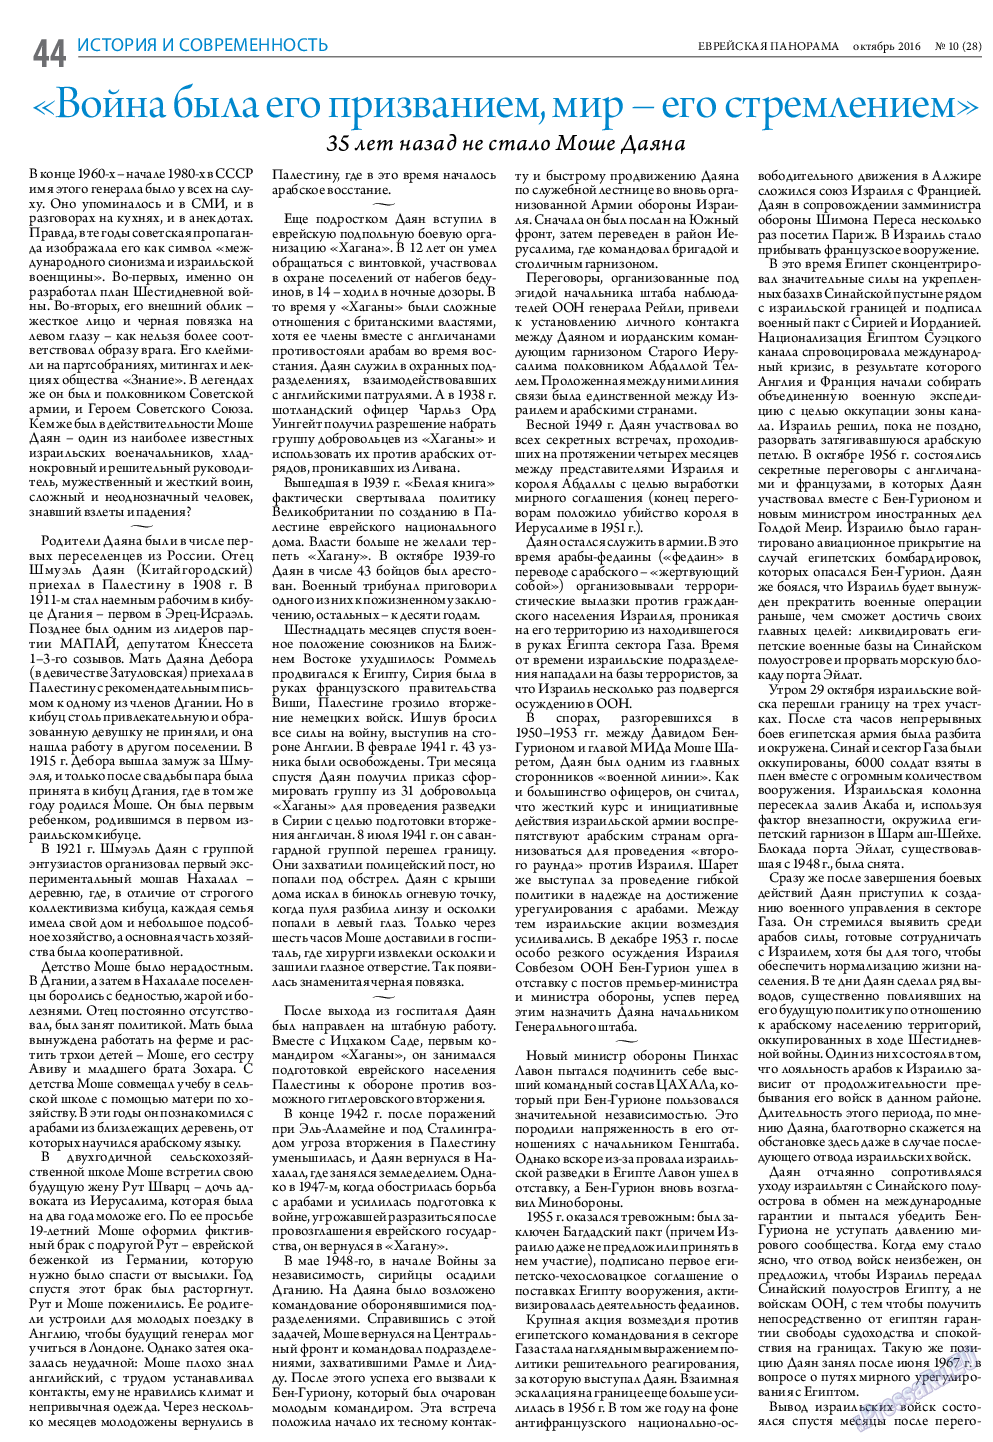 Еврейская панорама, газета. 2016 №10 стр.44